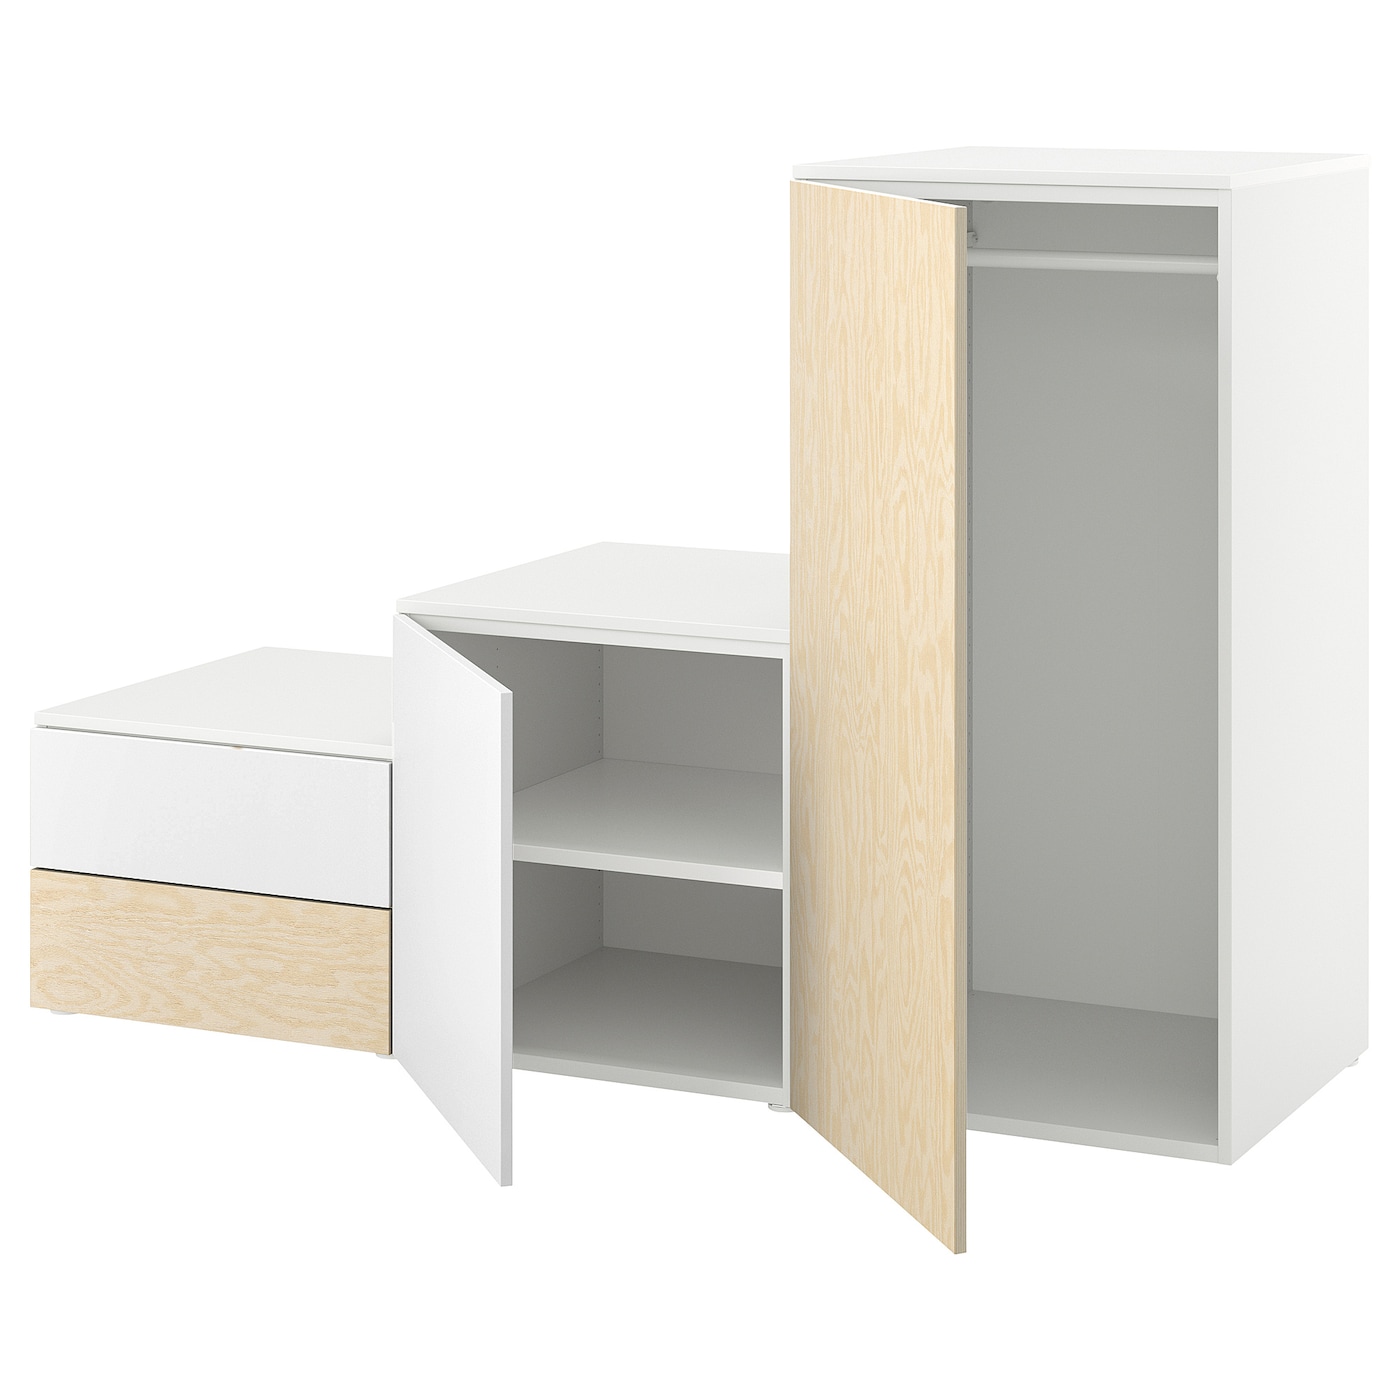 Шкаф - PLATSA IKEA/ ПЛАТСА ИКЕА, 123х180 см, белый/под беленый дуб